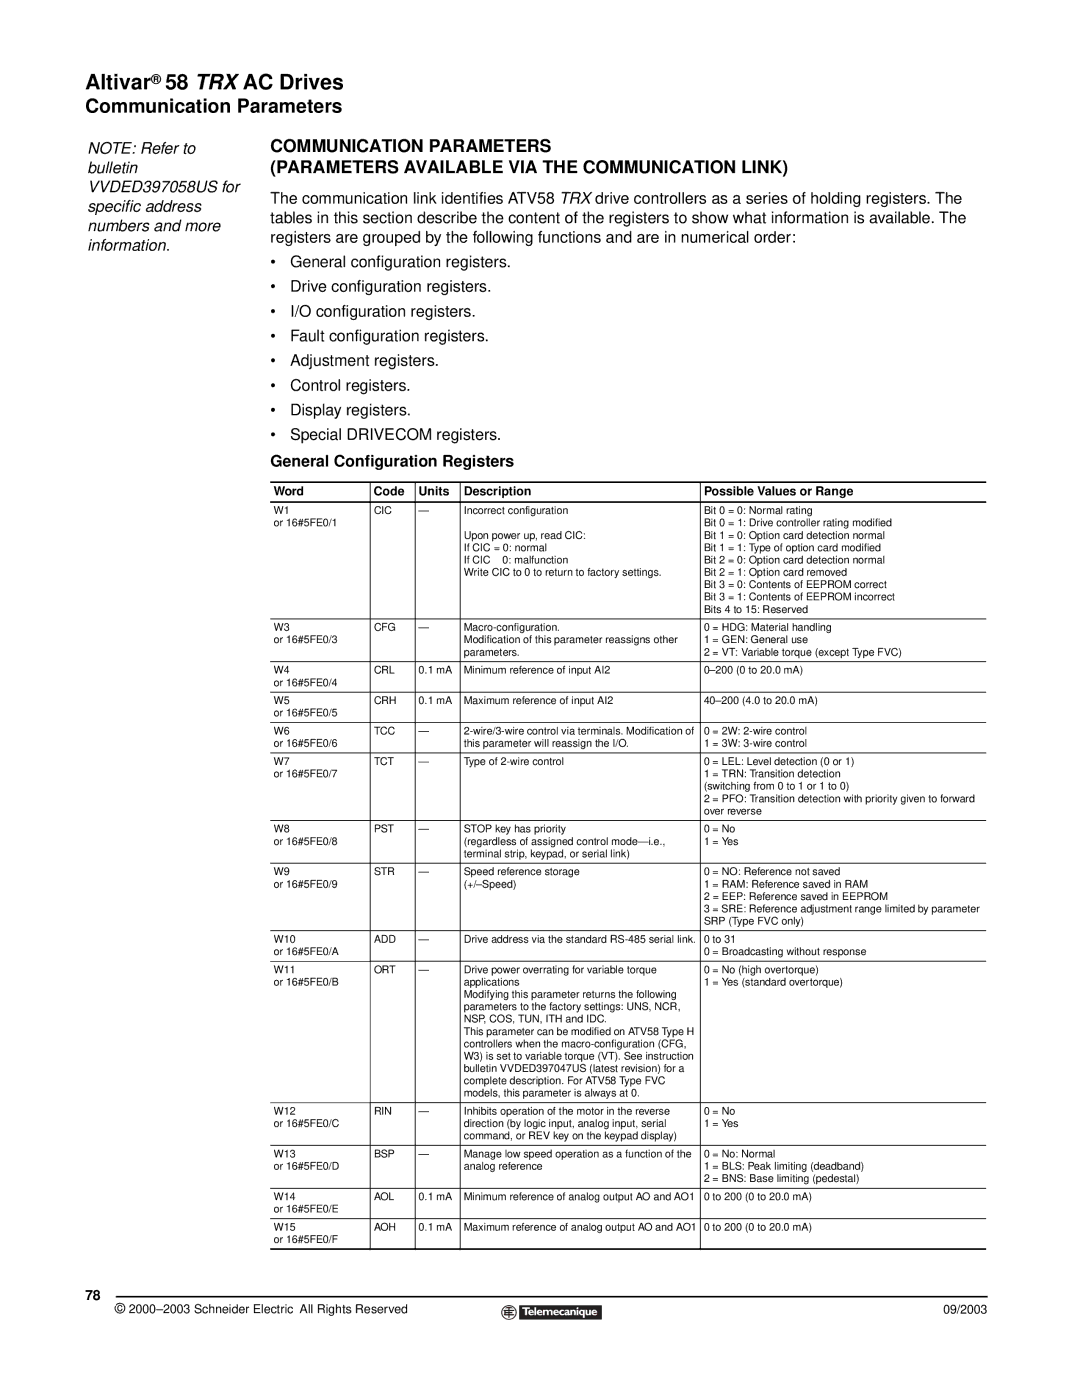 Schneider Electric 58 TRX manual Communication Parameters, General Configuration Registers 